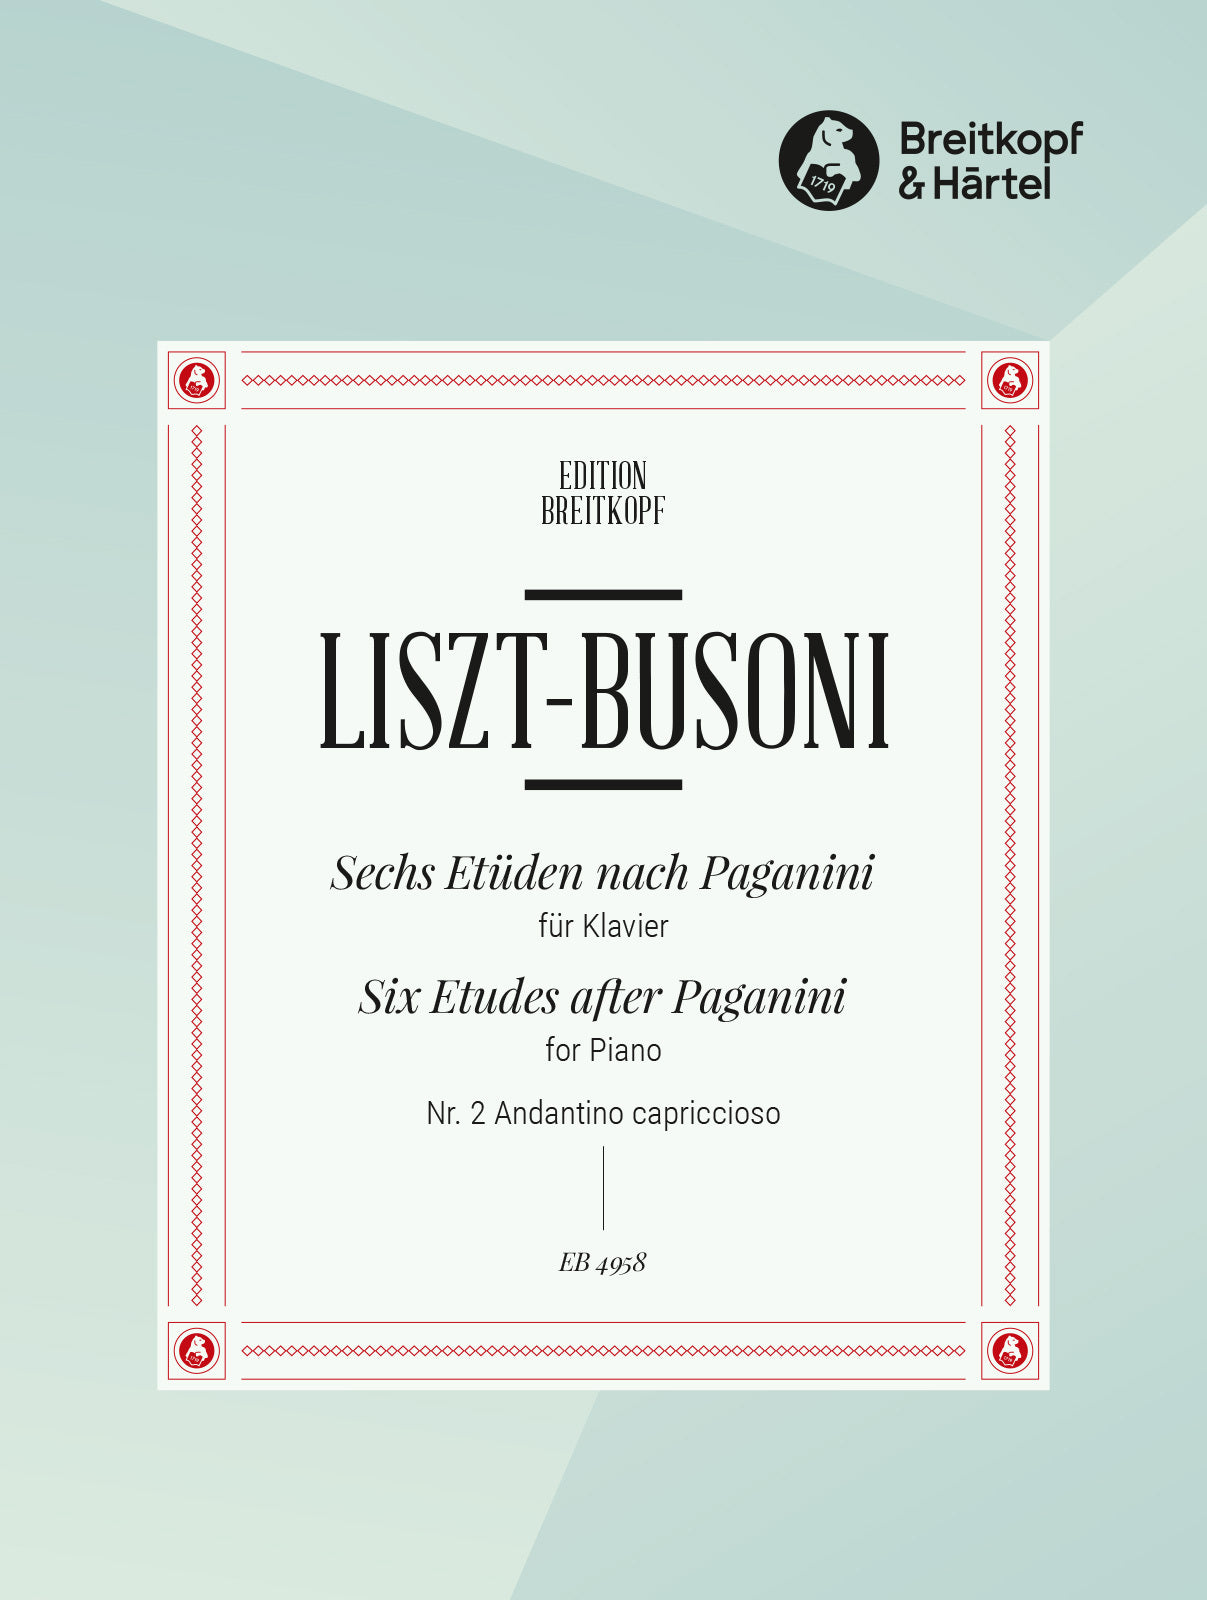 Liszt-Busoni: Etude No. 2 after Paganini - "Andantino capriccioso"